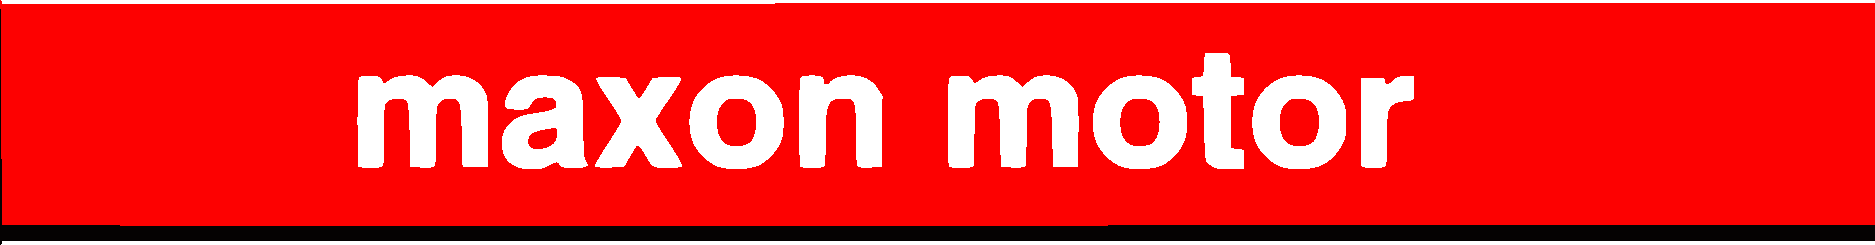 Maxon Motor Logo Vector